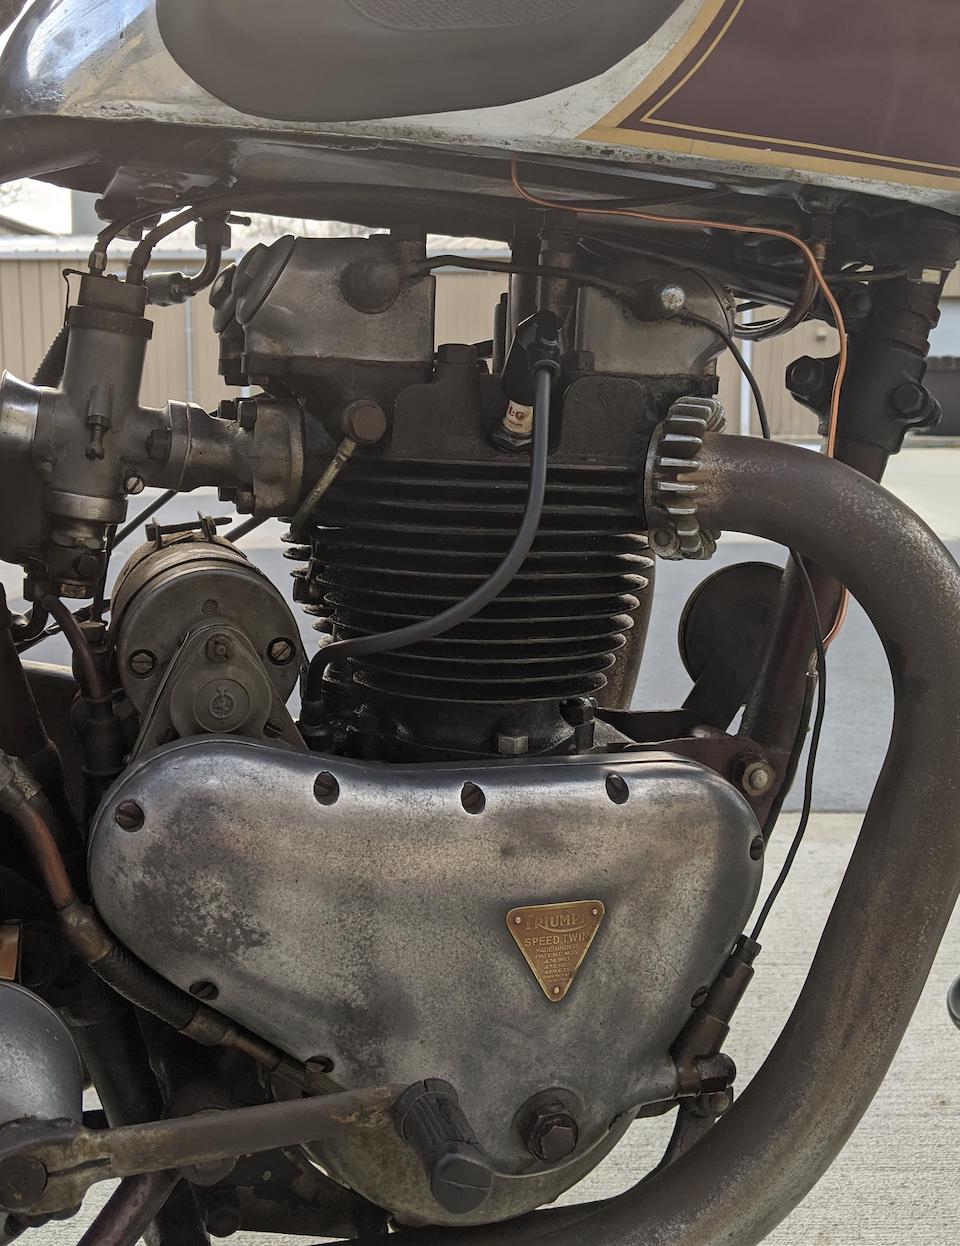 The ex-Bud Ekins, 1938 Triumph 500cc 5T Speed Twin Frame no. T.H.6226 Engine no. 8-5T 12877